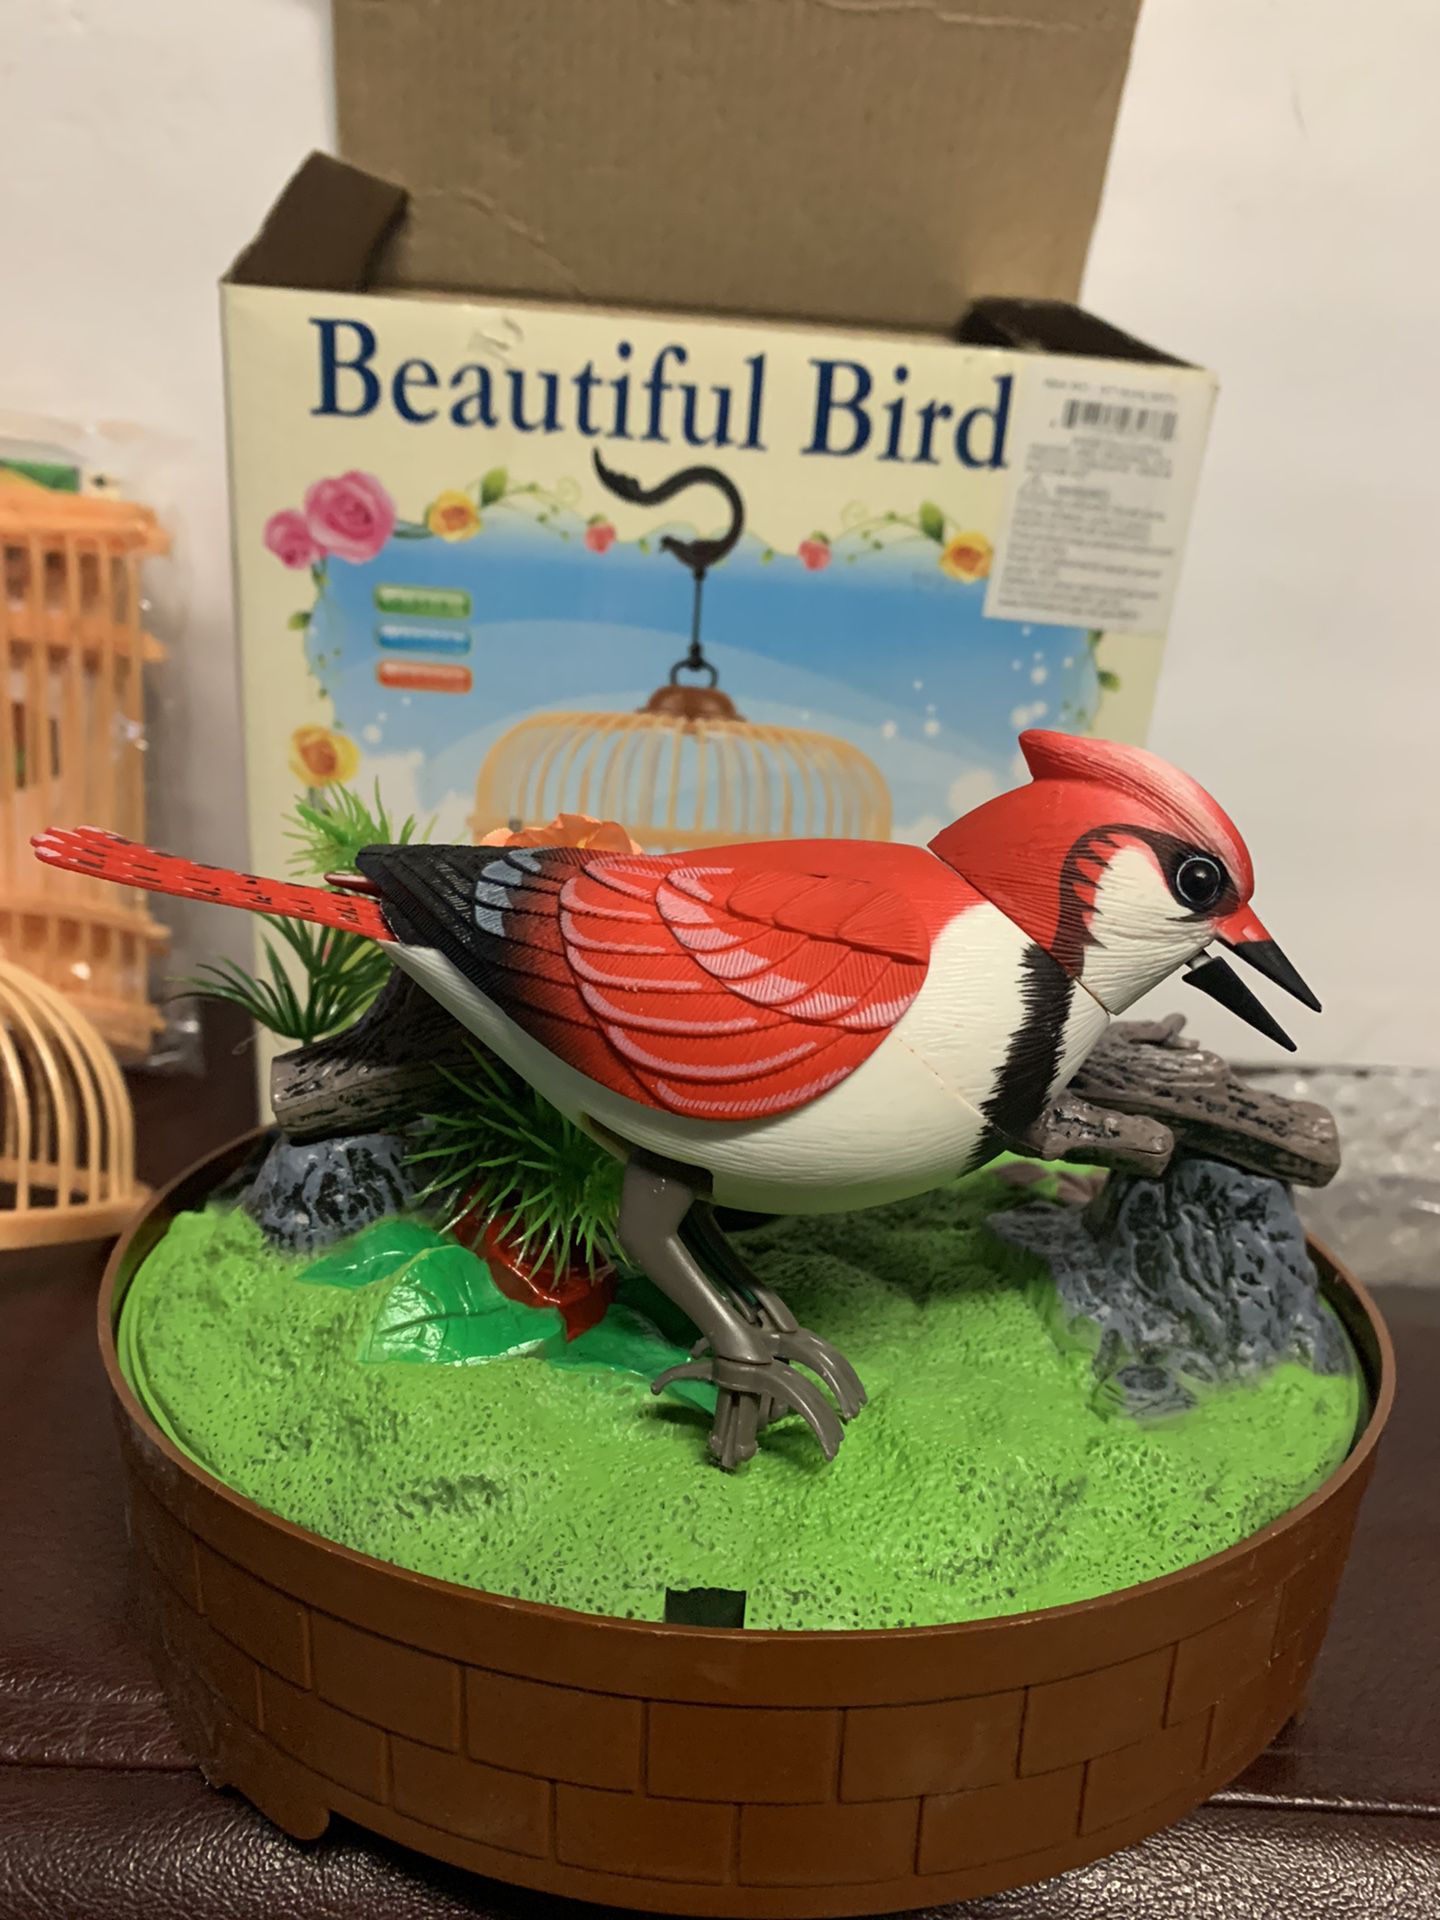 Beautiful  Bird Toy Pet In Cage Chirping/Simging Electronic  bird’s beak, neck & body move as it chirps